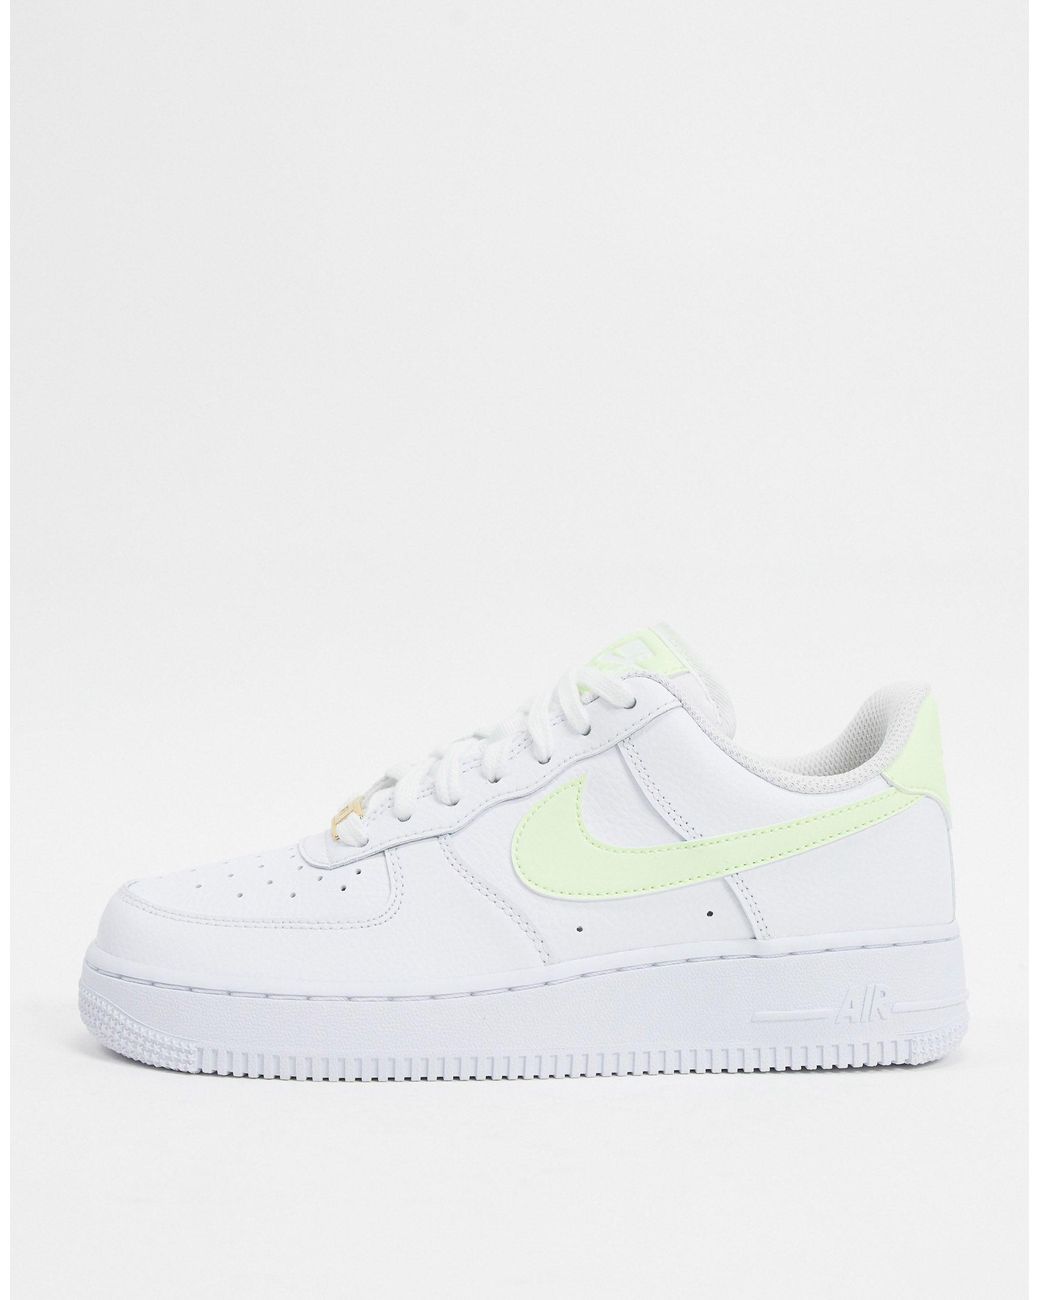 Nike Air Force 1 '07 White And Fluro Green Sneakers | Lyst Australia